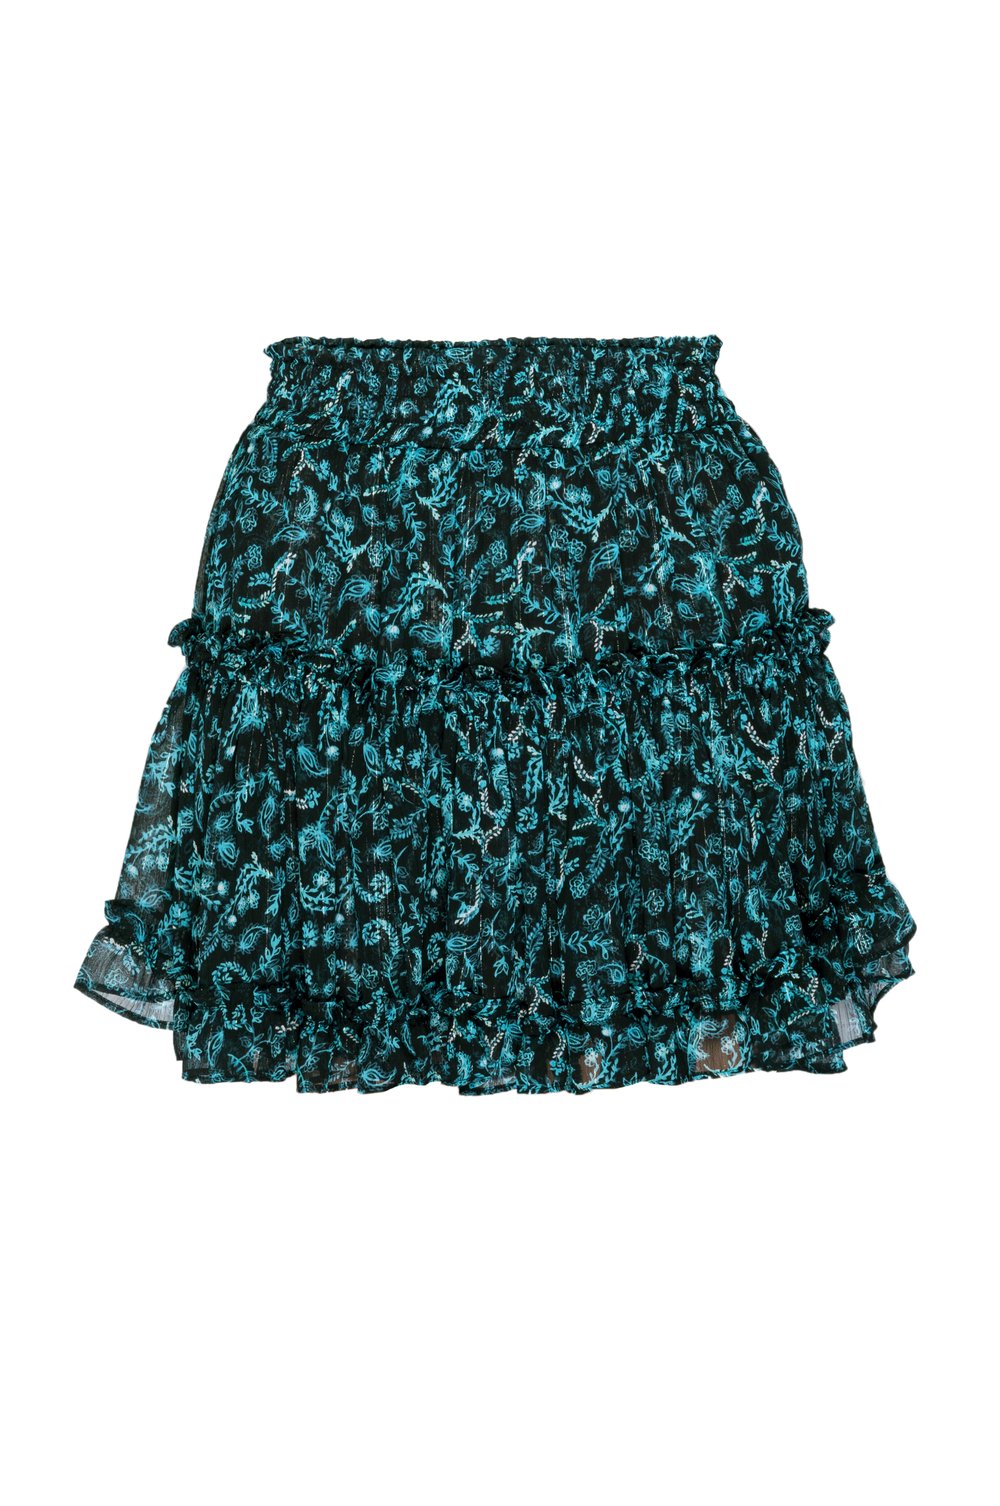 Misa - Marion Skirt in Teal Shimmer Lurex